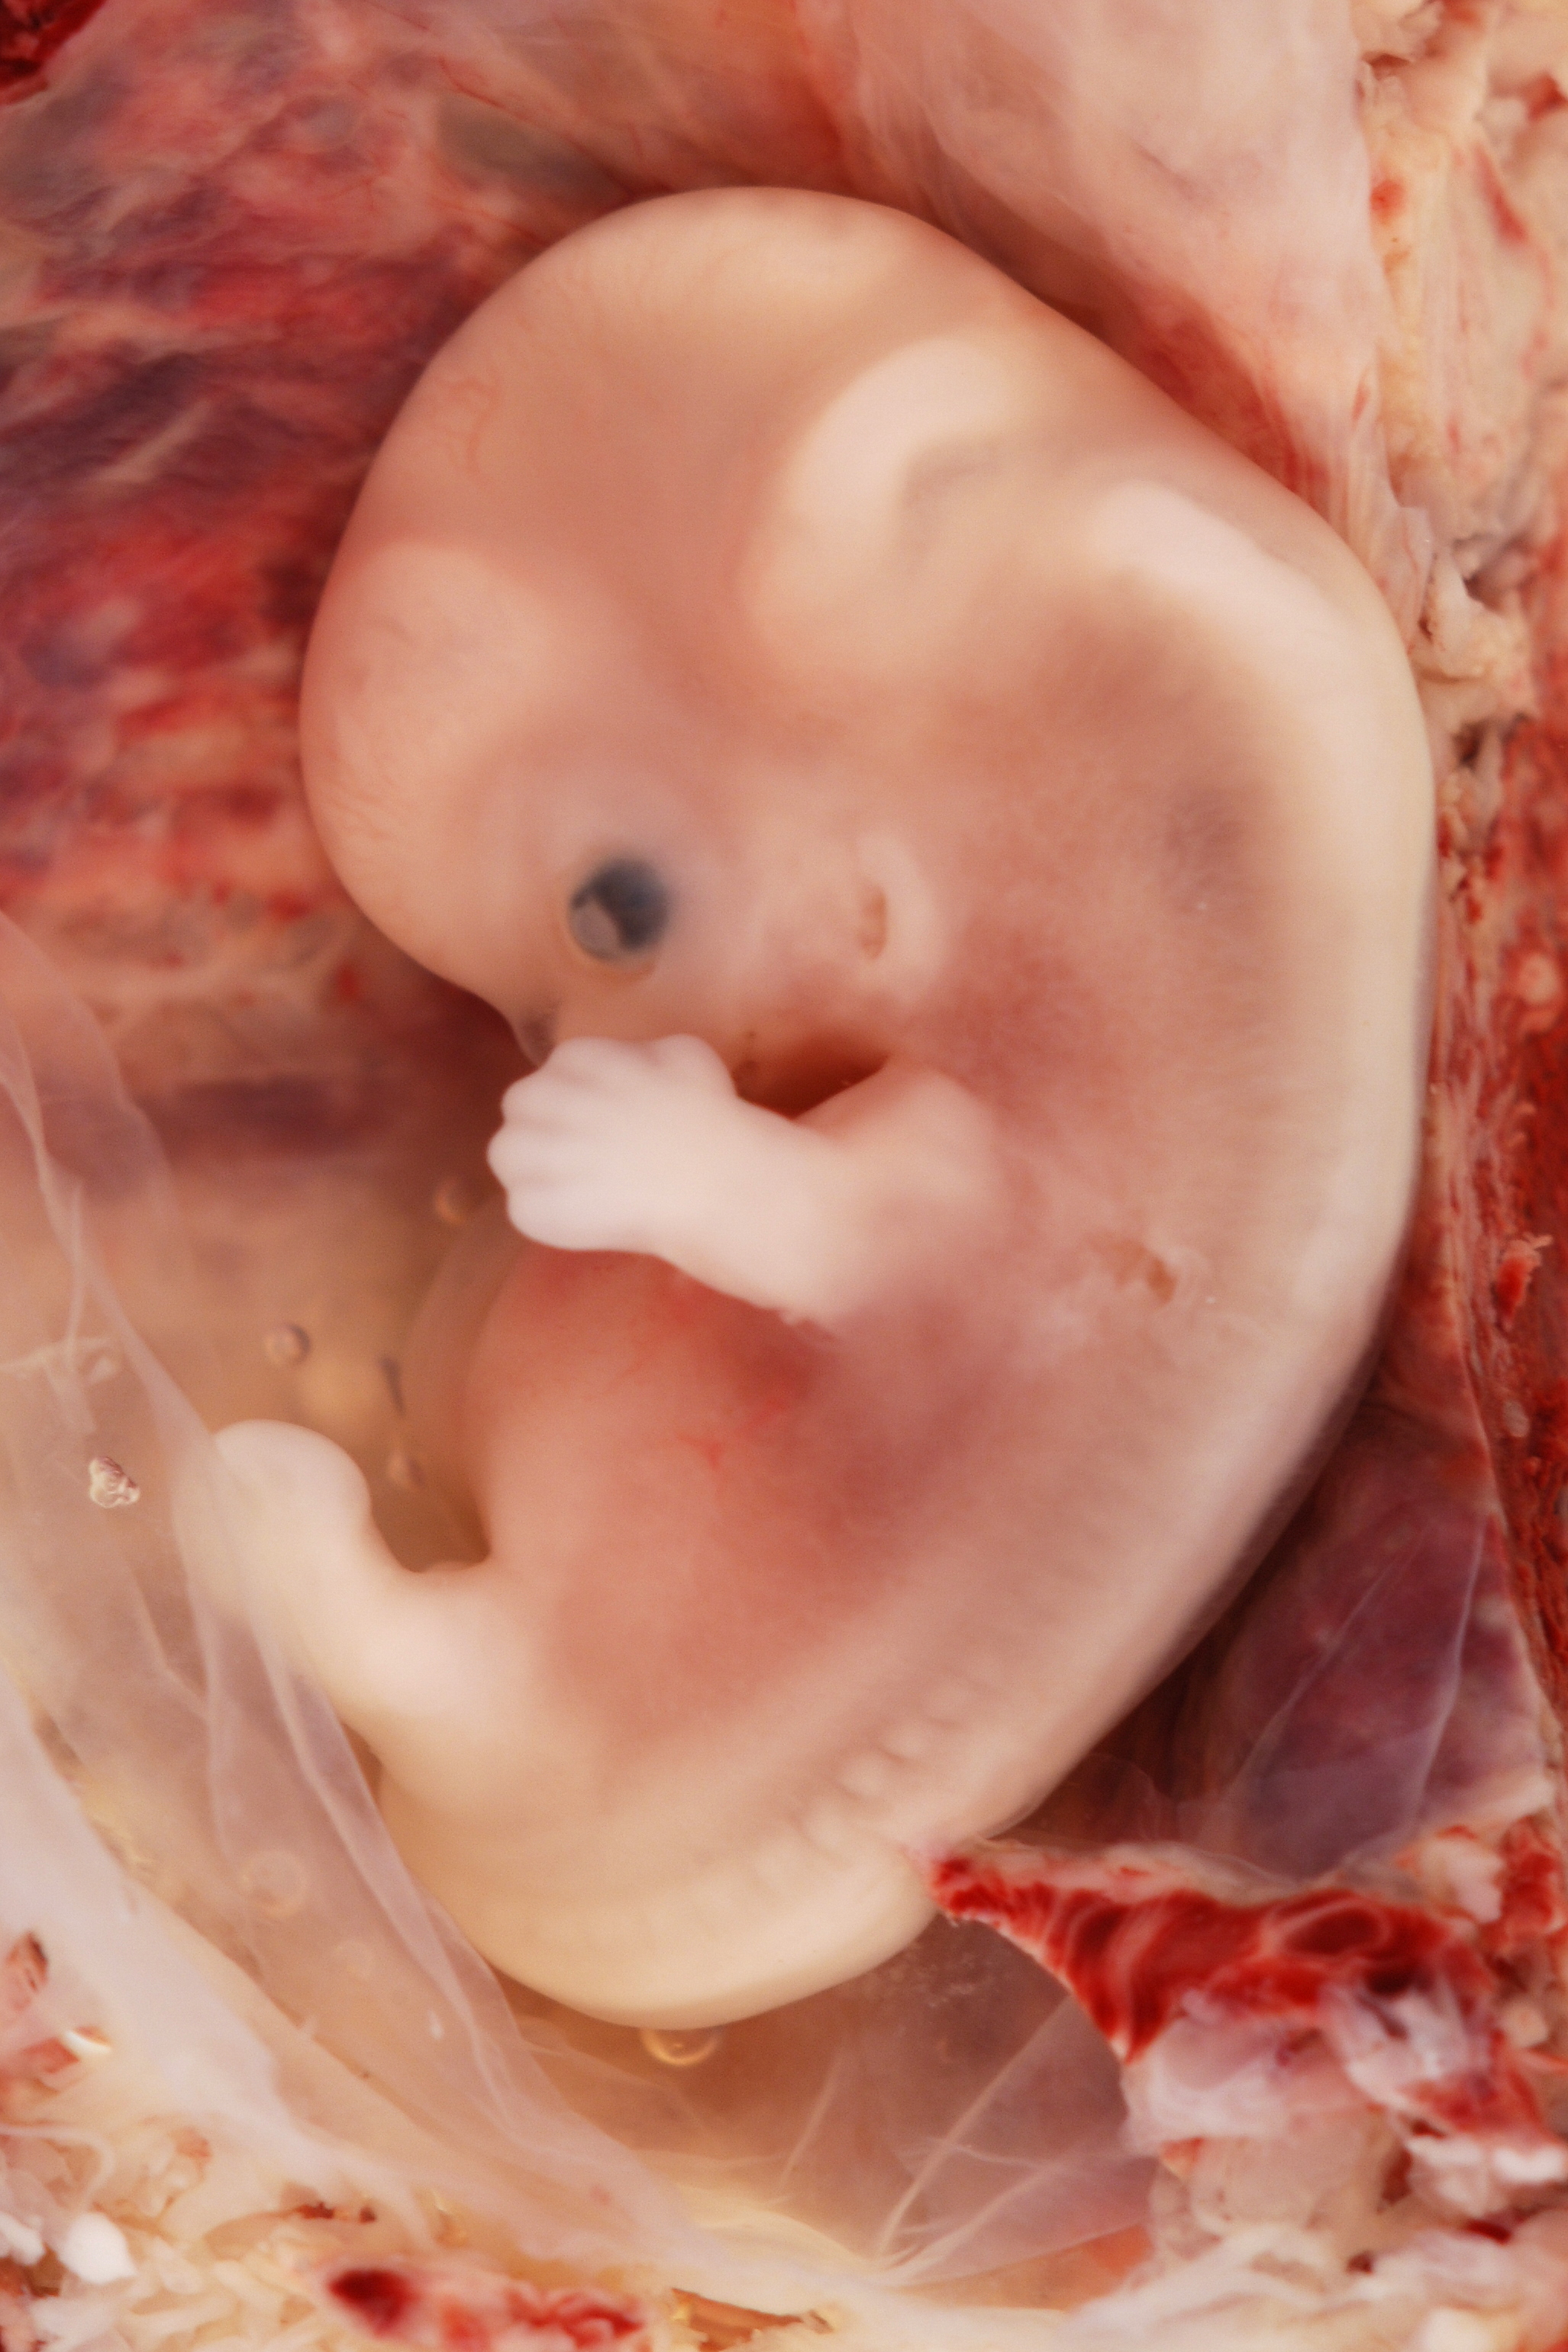 9-Week_Human_Embryo_from_Ectopic_Pregnan